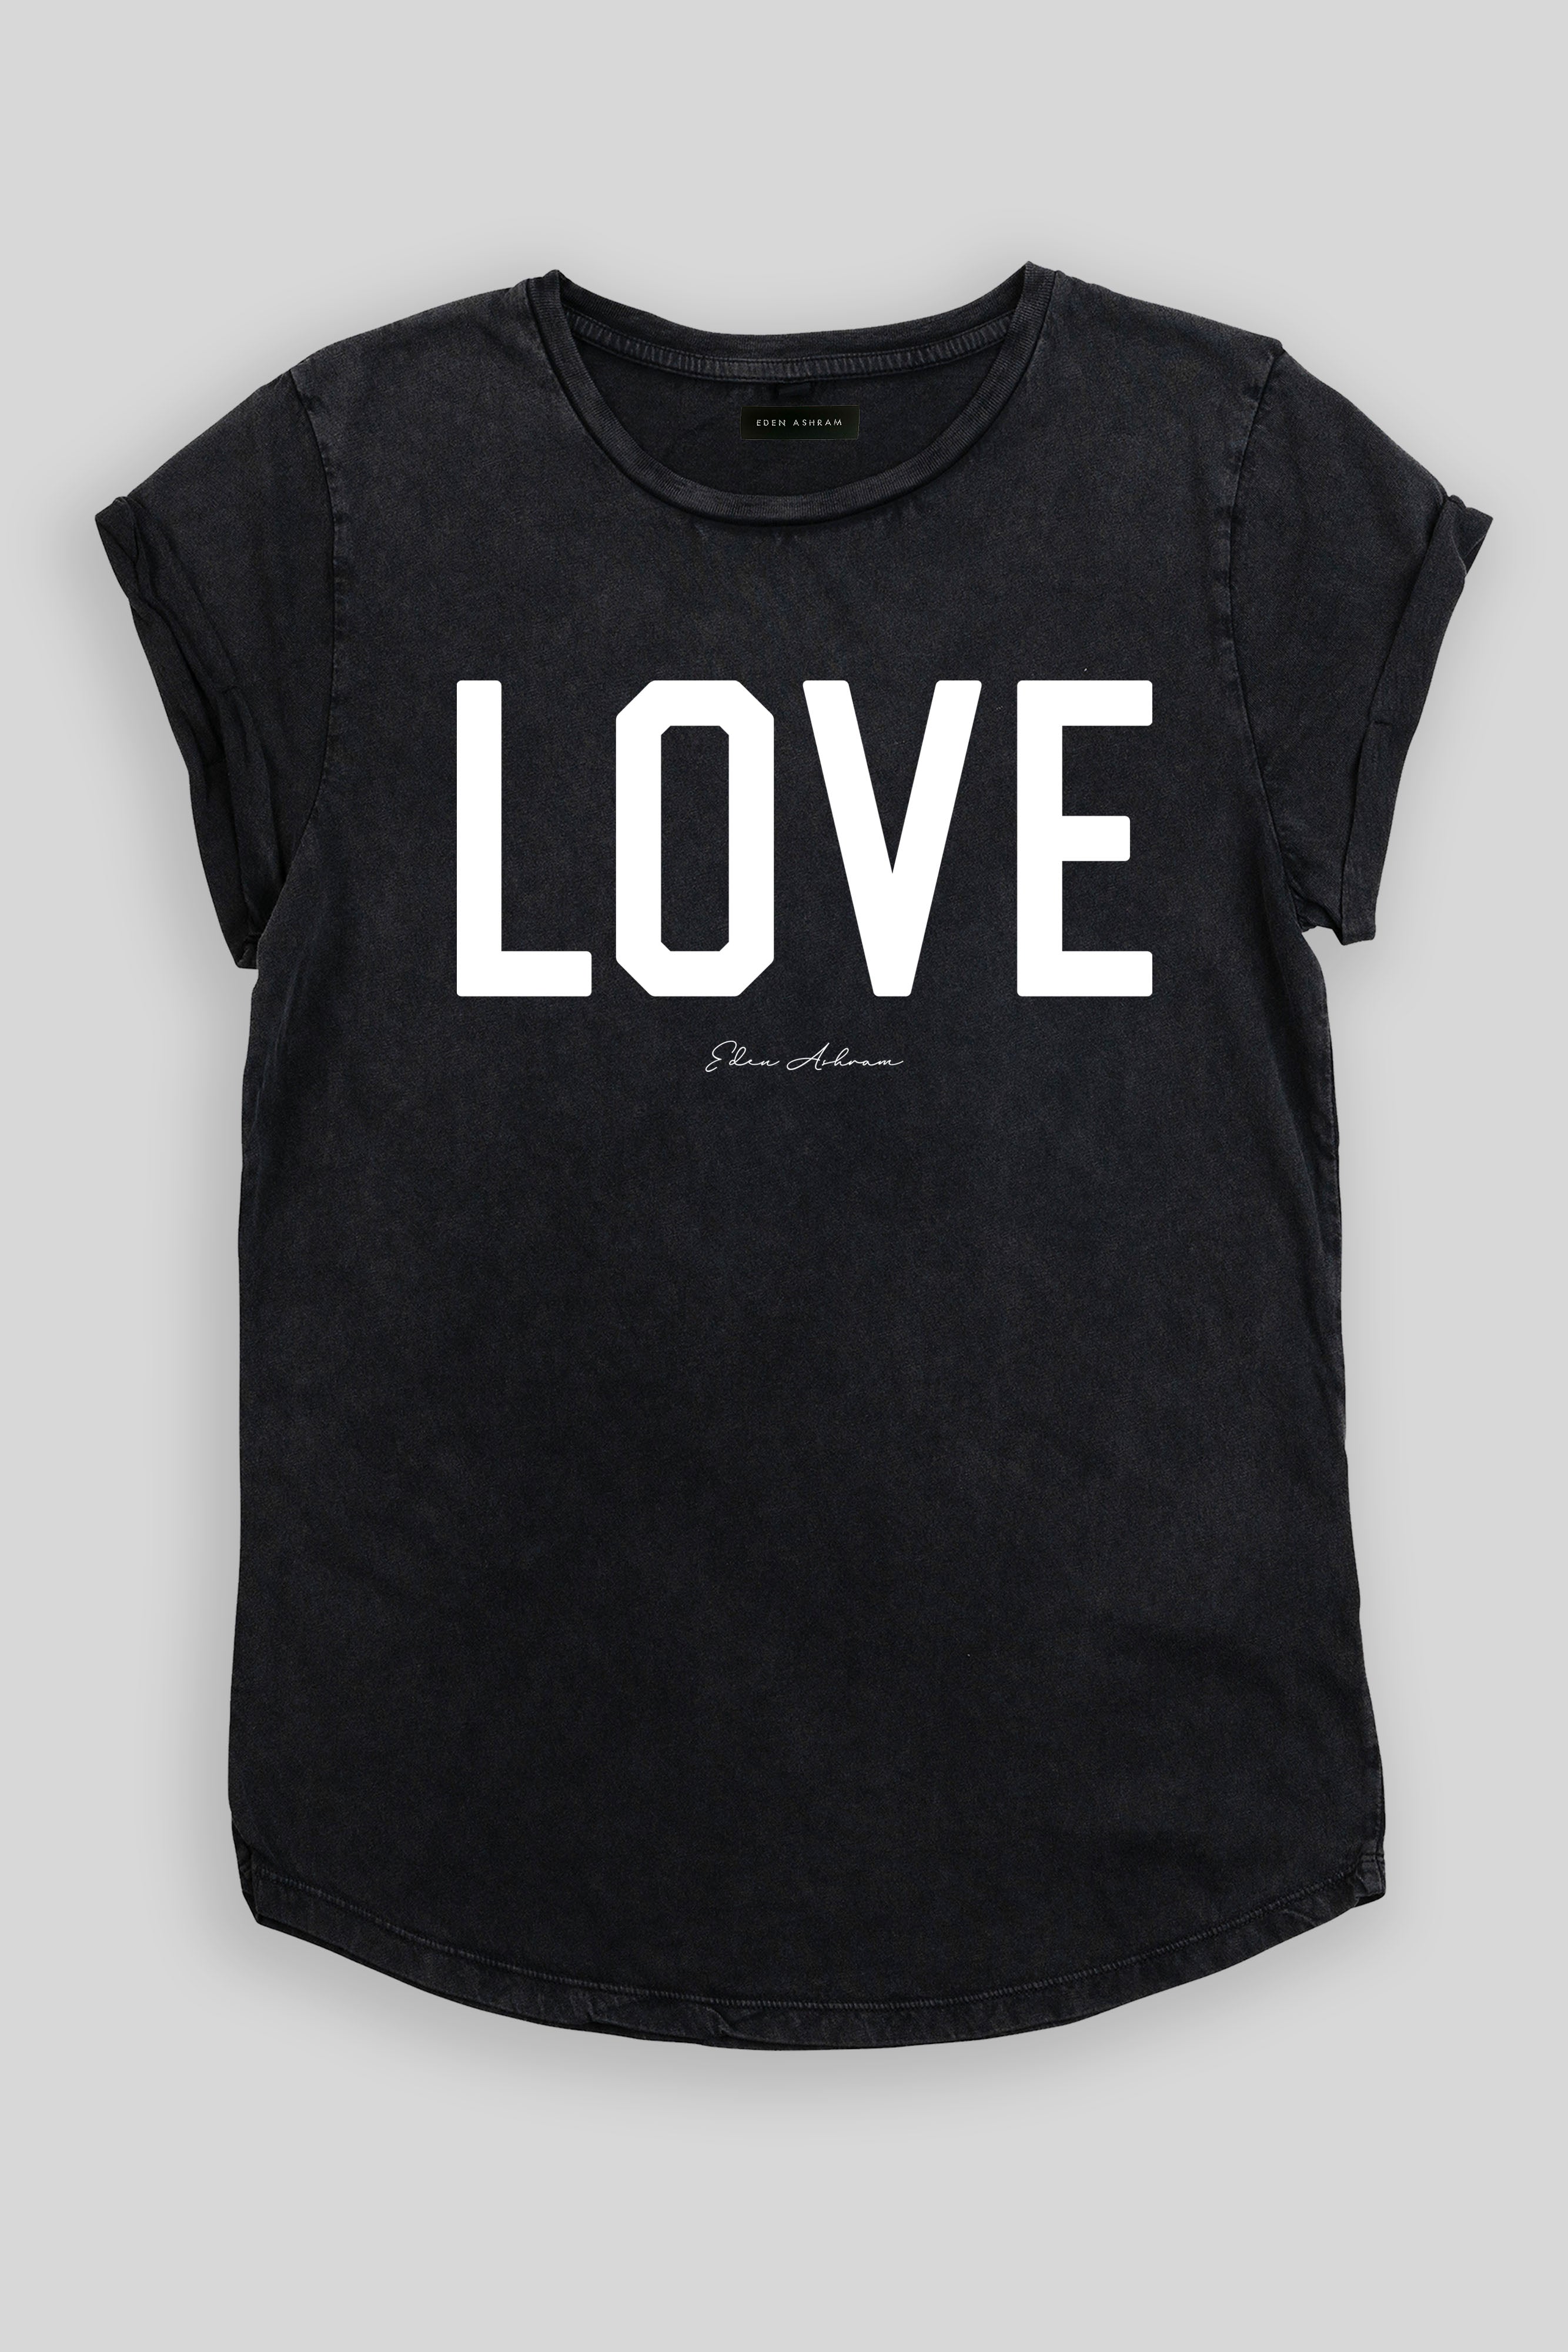 EDEN ASHRAM LOVE Premium Rolled Sleeve T-Shirt Stonewash Black